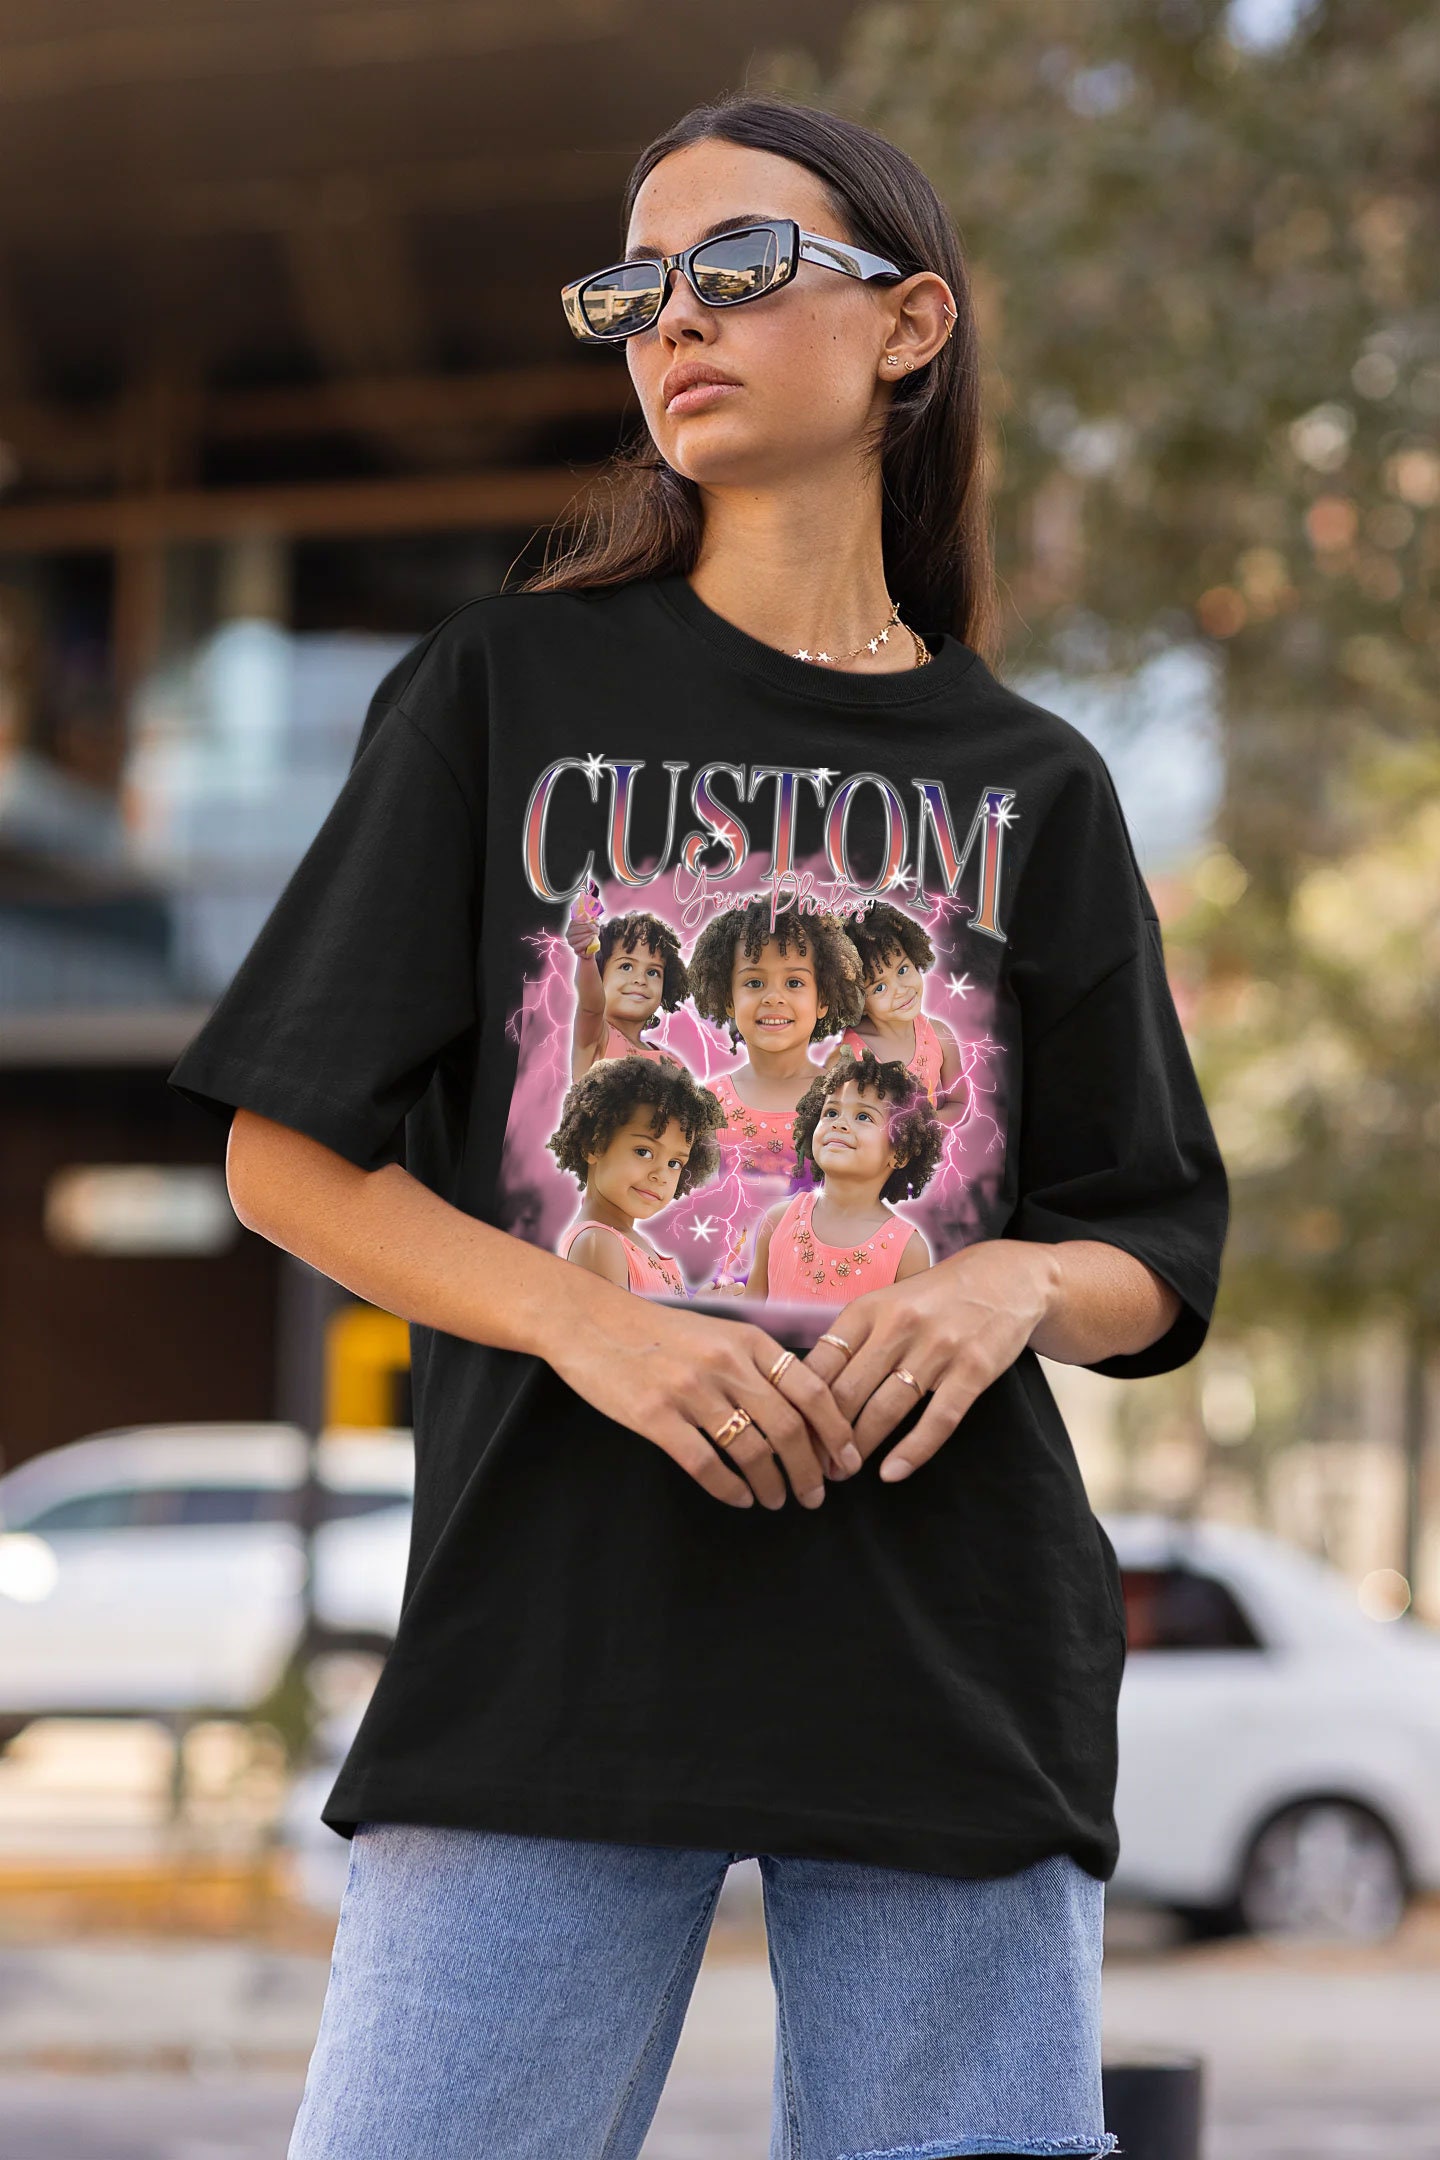 Discover CUSTOM Your Own Bootleg Idea Here, Custom Bootleg Shirt, Insert Your Design, Personalized T-shirt , Custom Graphic Tees, Personalized Shirt